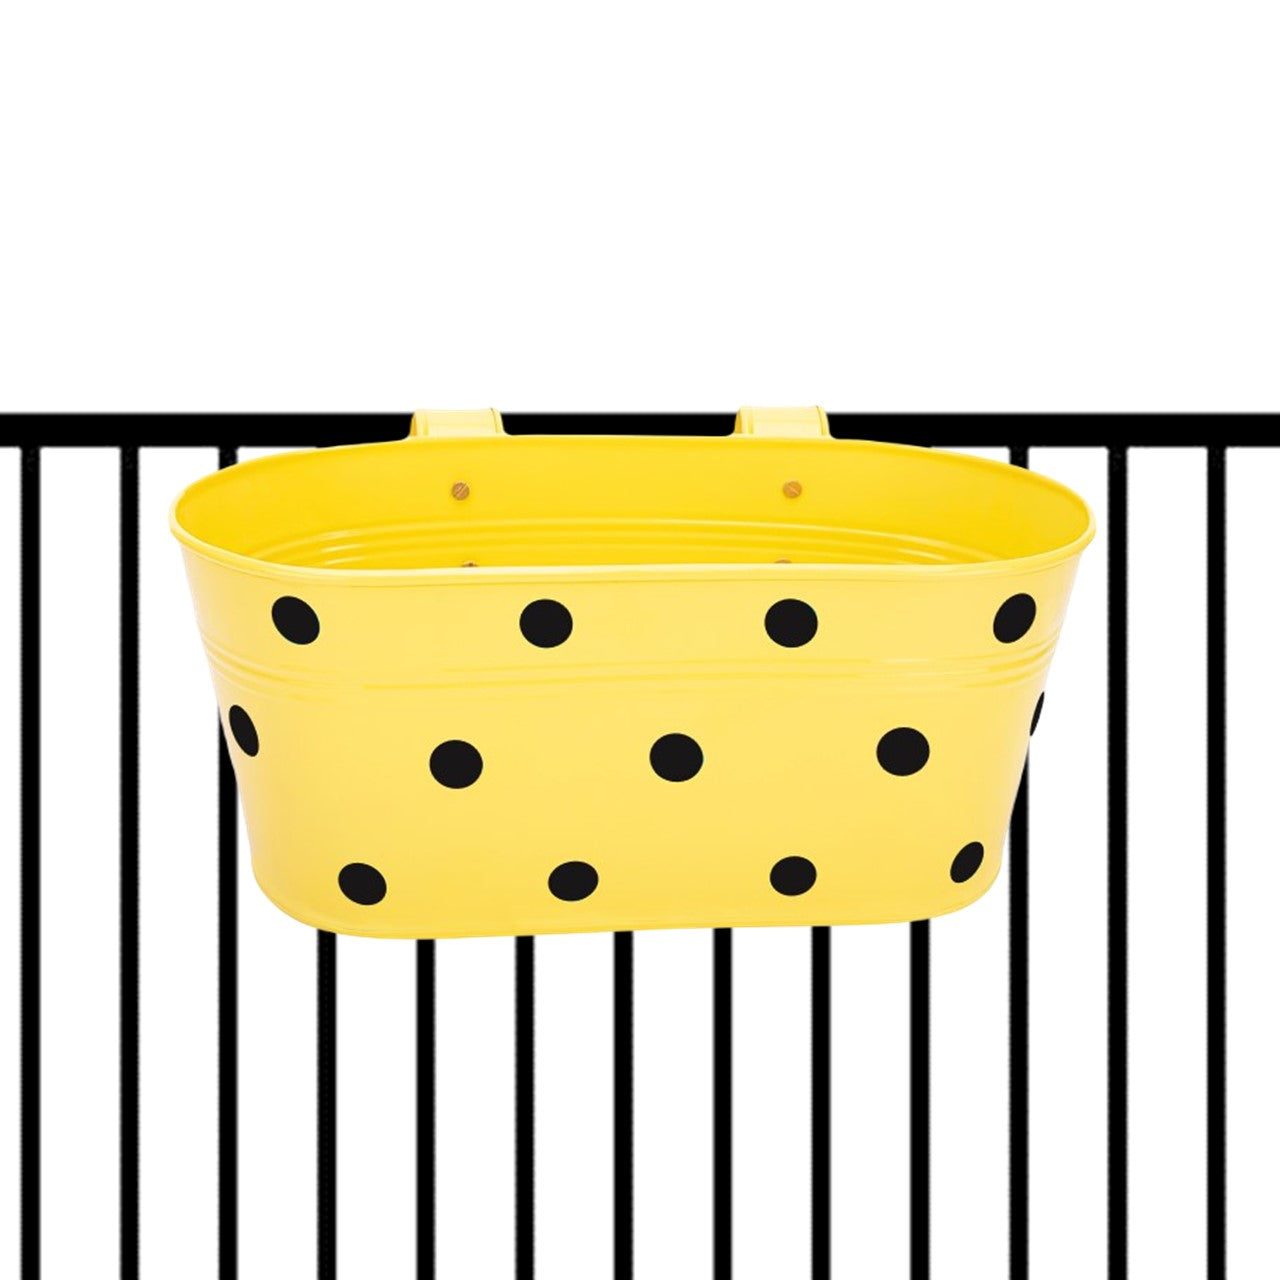 ecofynd Oval Polka Dot Balcony Railing Planter with Detachable Handle, Yellow Railing Planter freeshipping - Ecofynd